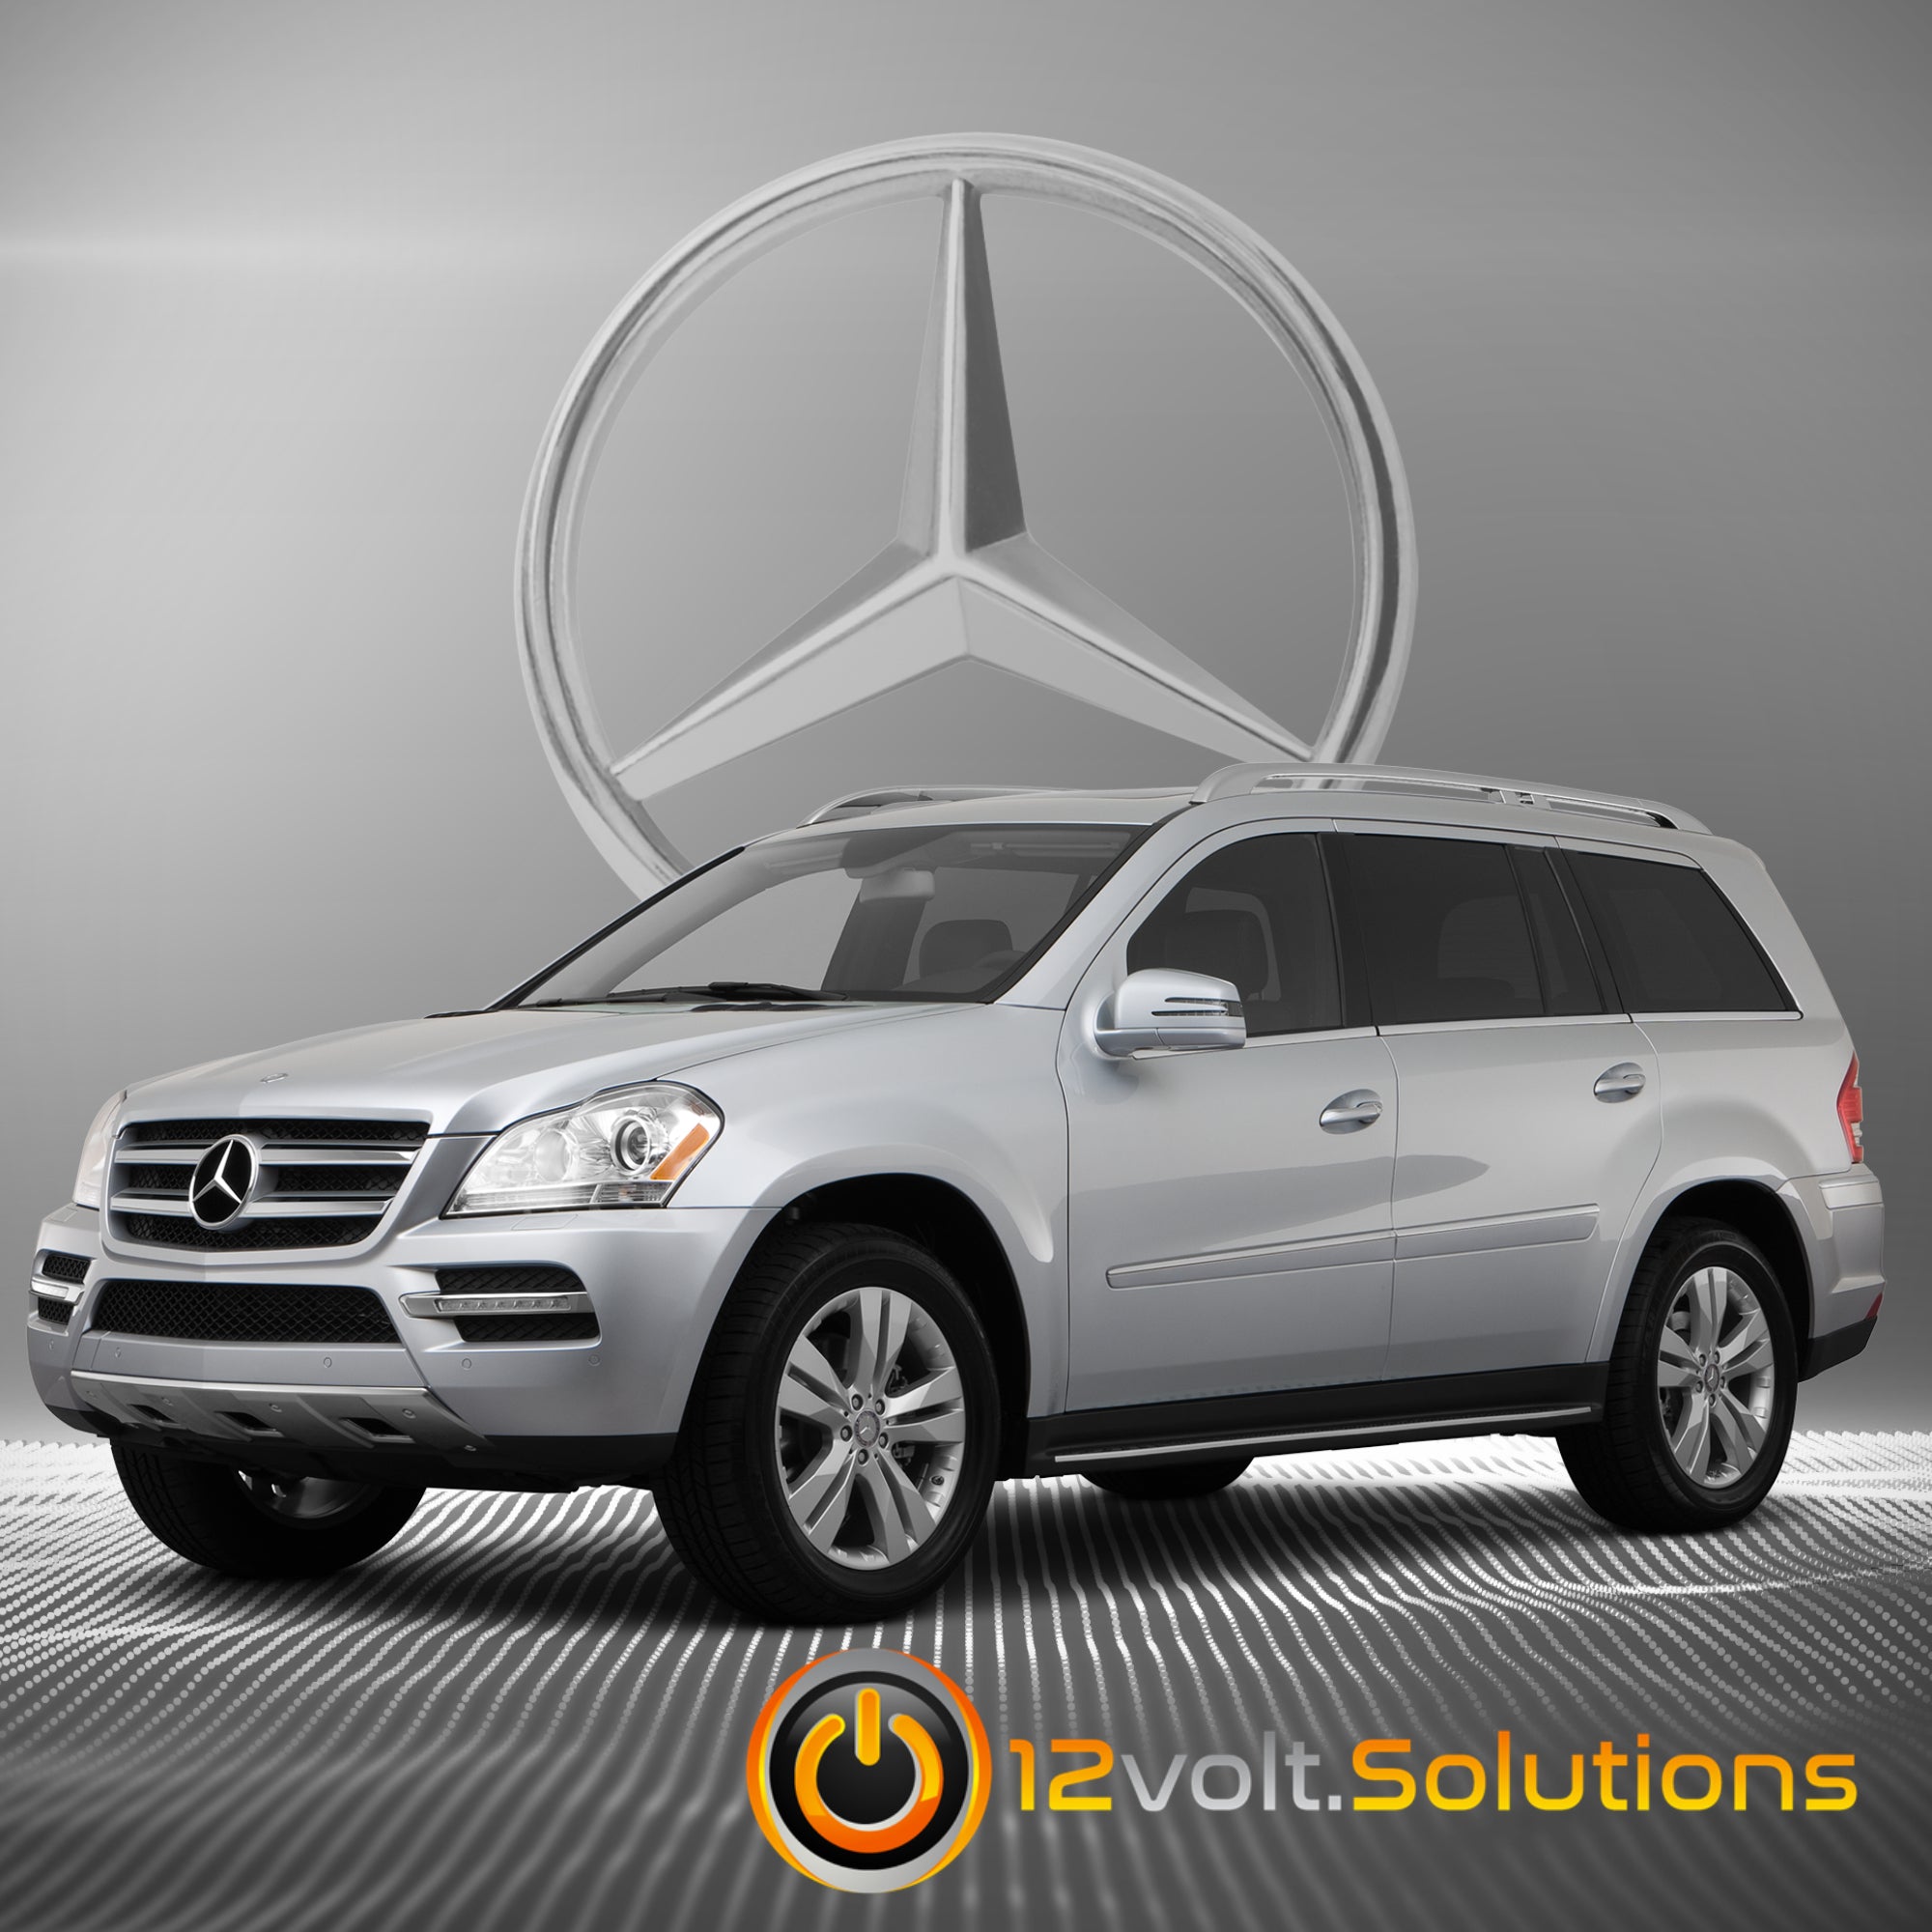 2007-2012 Mercedes Benz GL-Class Plug & Play Remote Start Kit-12Volt.Solutions